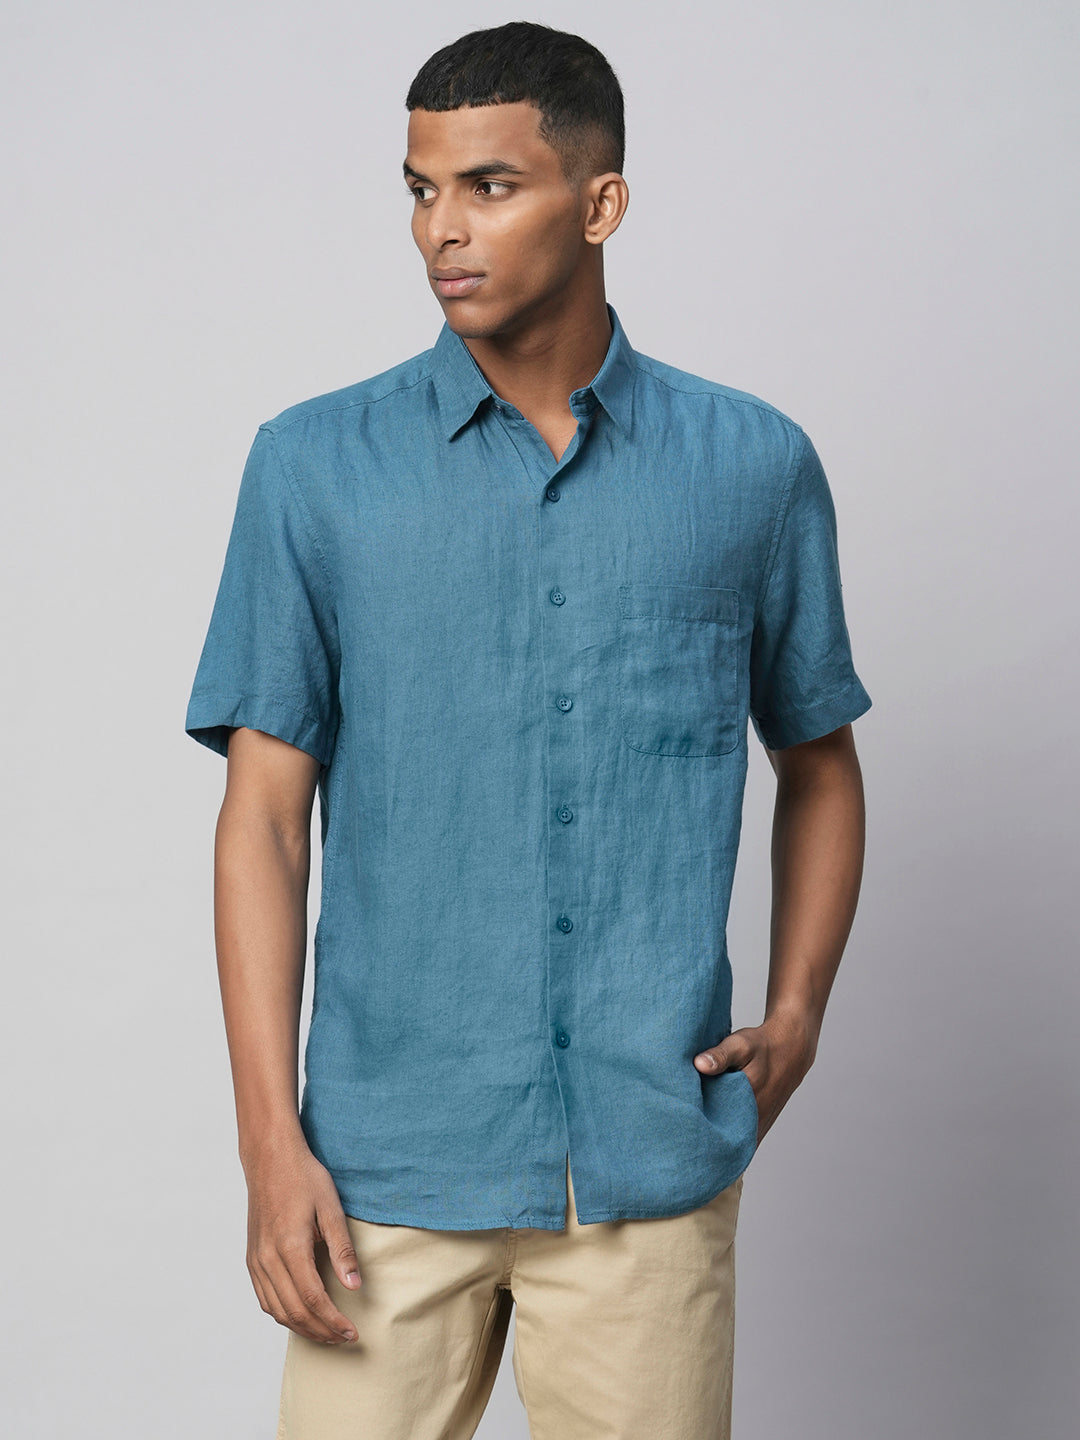 Men's Teal 100% Linen Regular Fit Short Sleeved Shirt